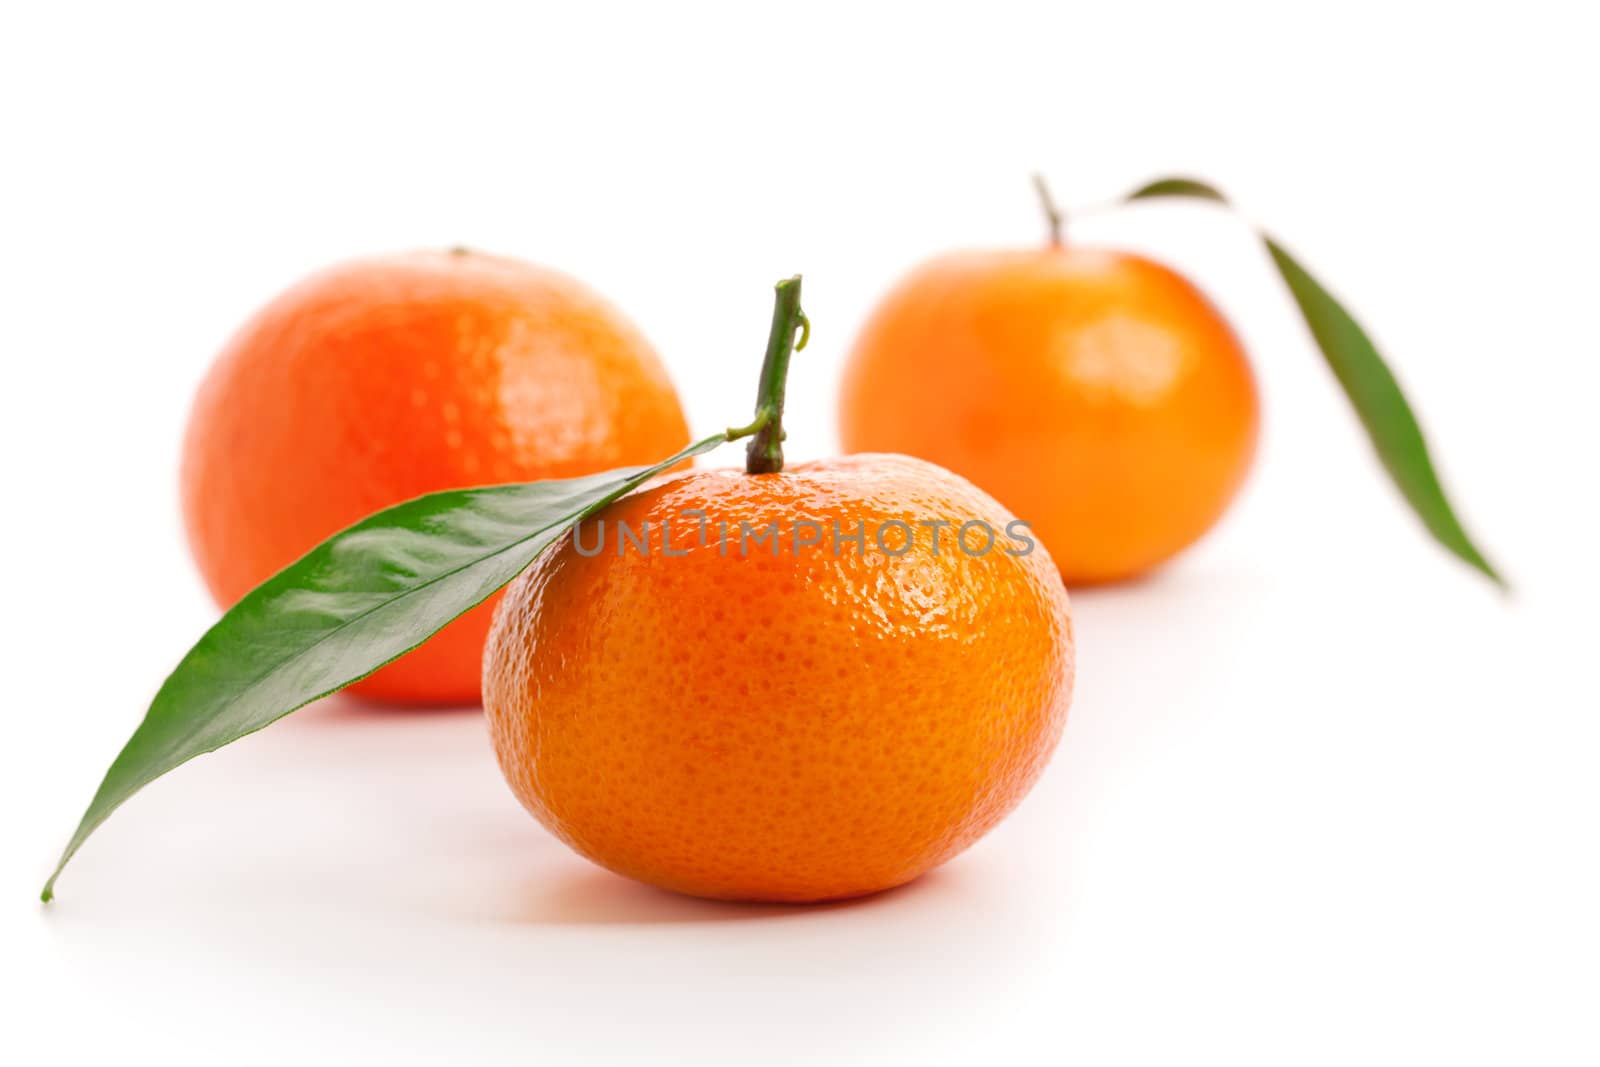 orange mandarins with green leaf isolated on white background  by motorolka